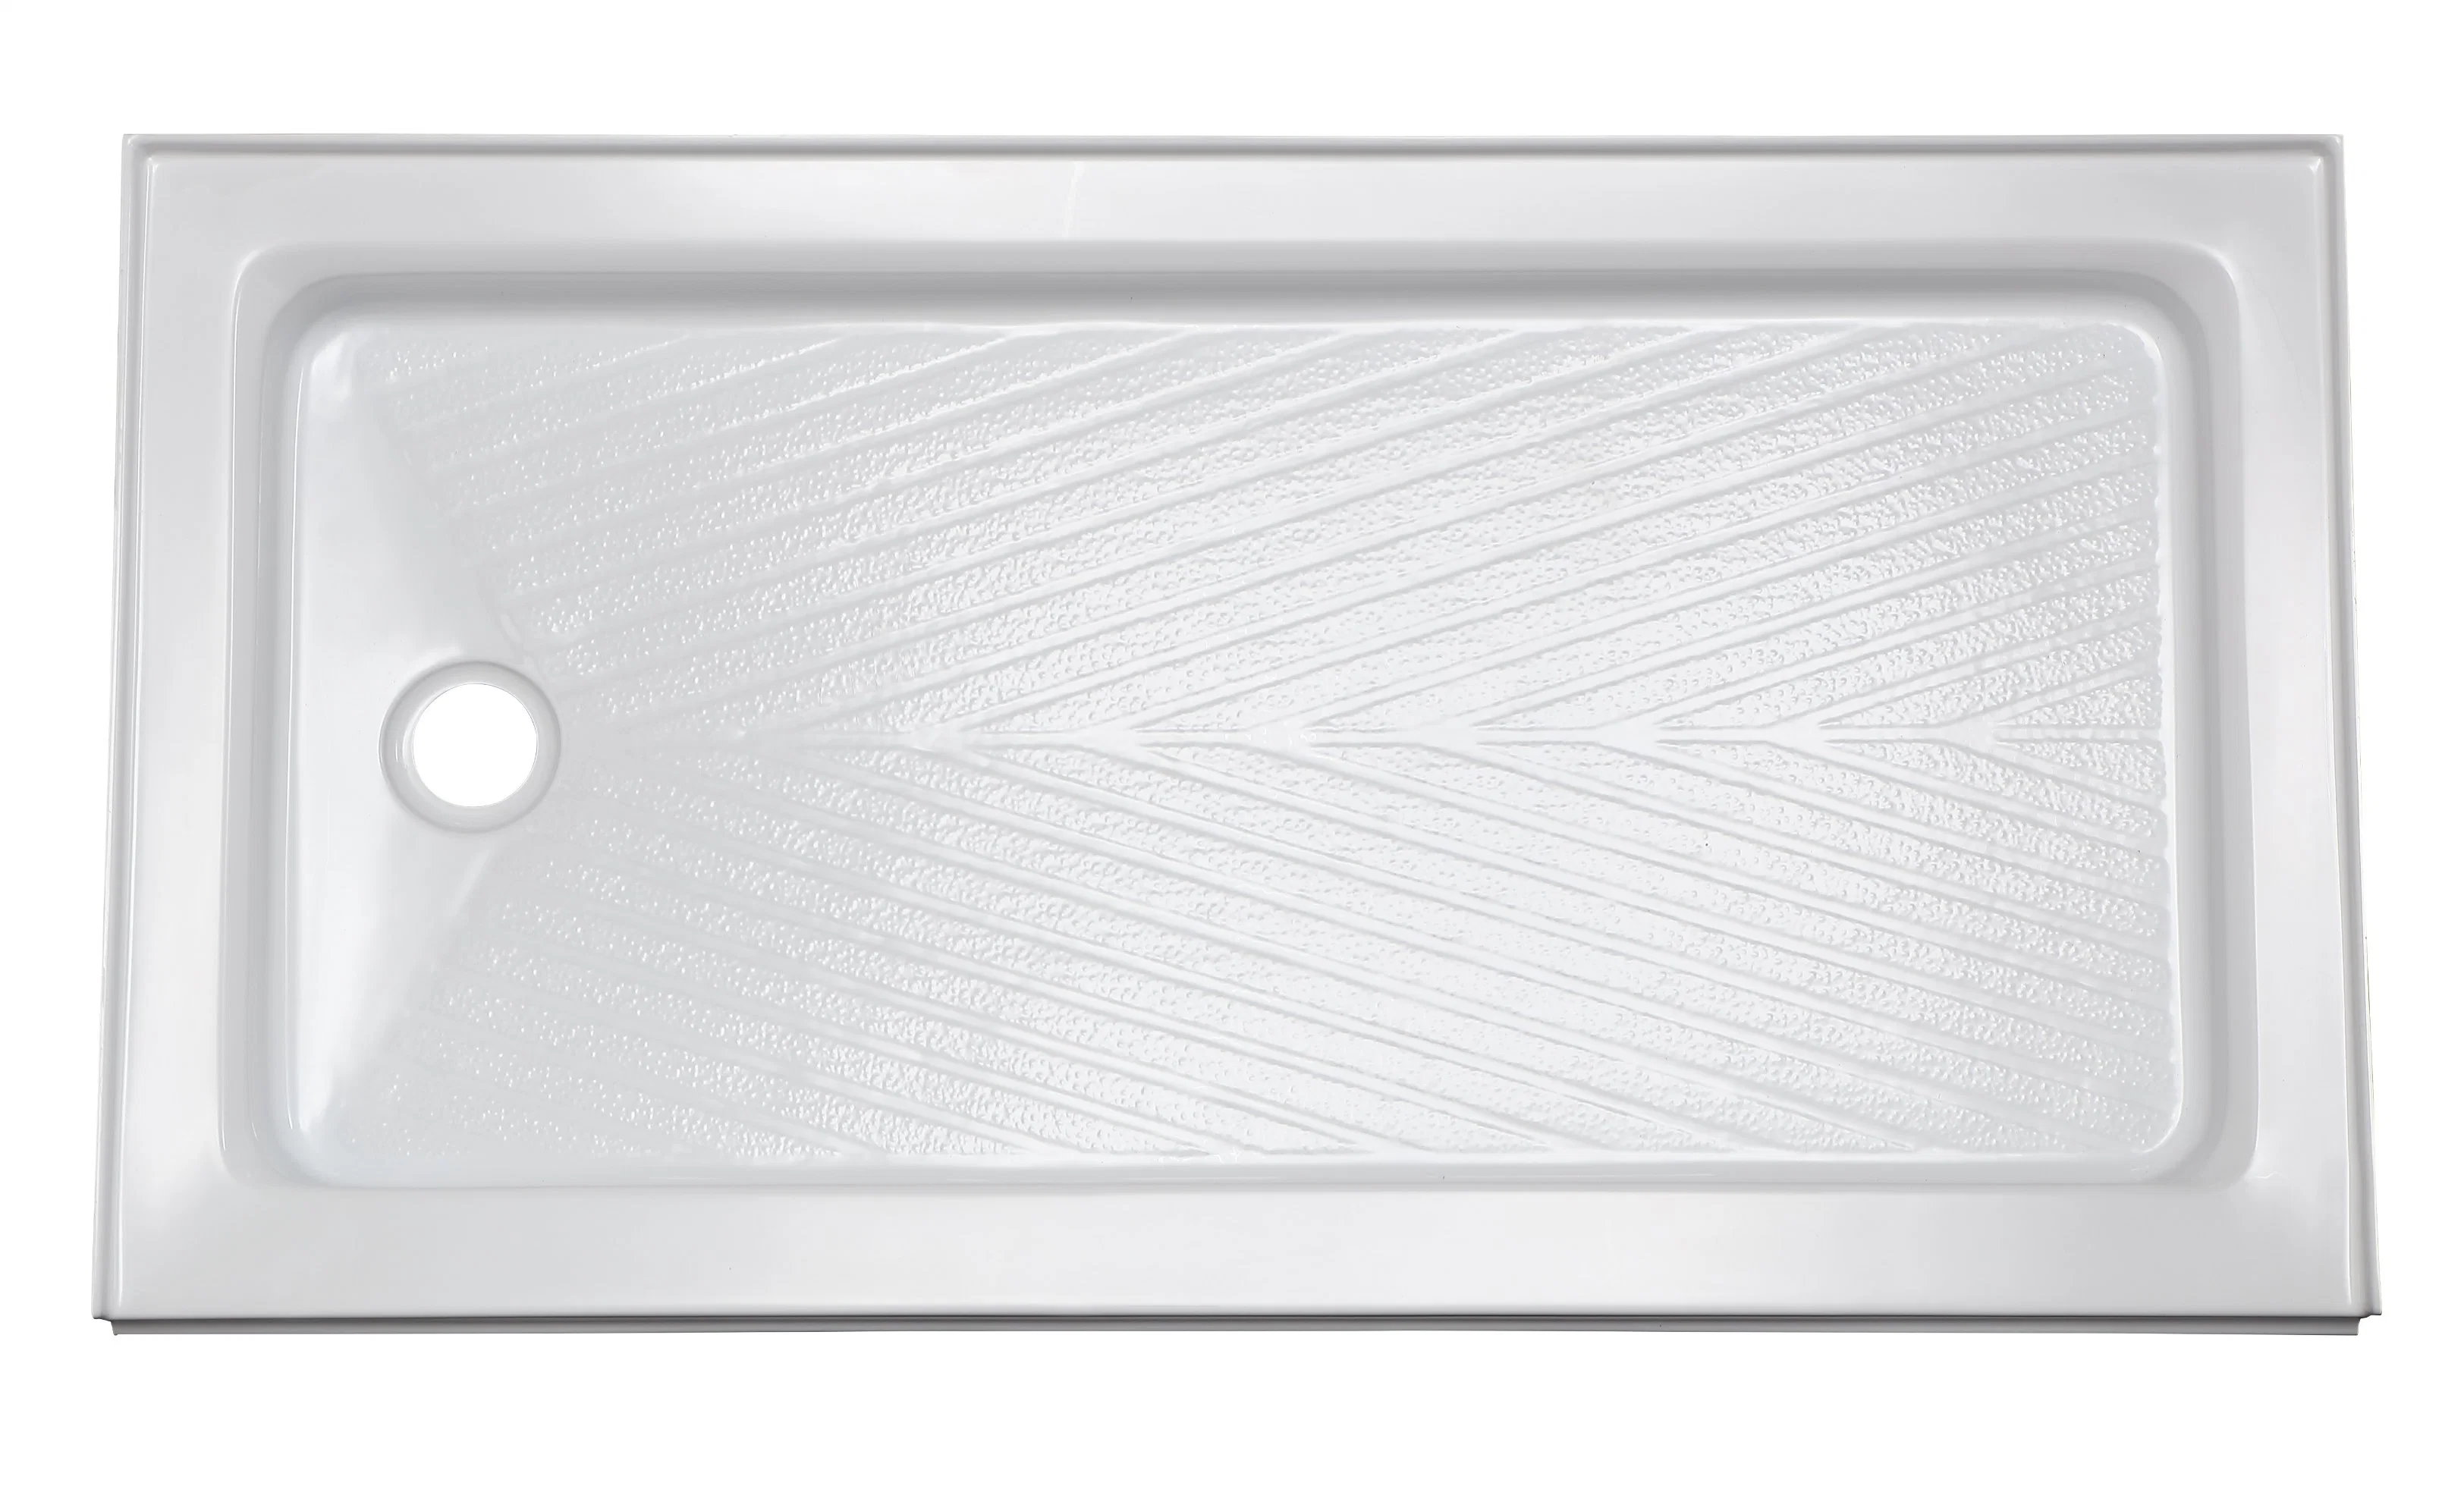 Woma 60 Inches Anti-Slip Cupc Shower Tray Base Pan (BT018)